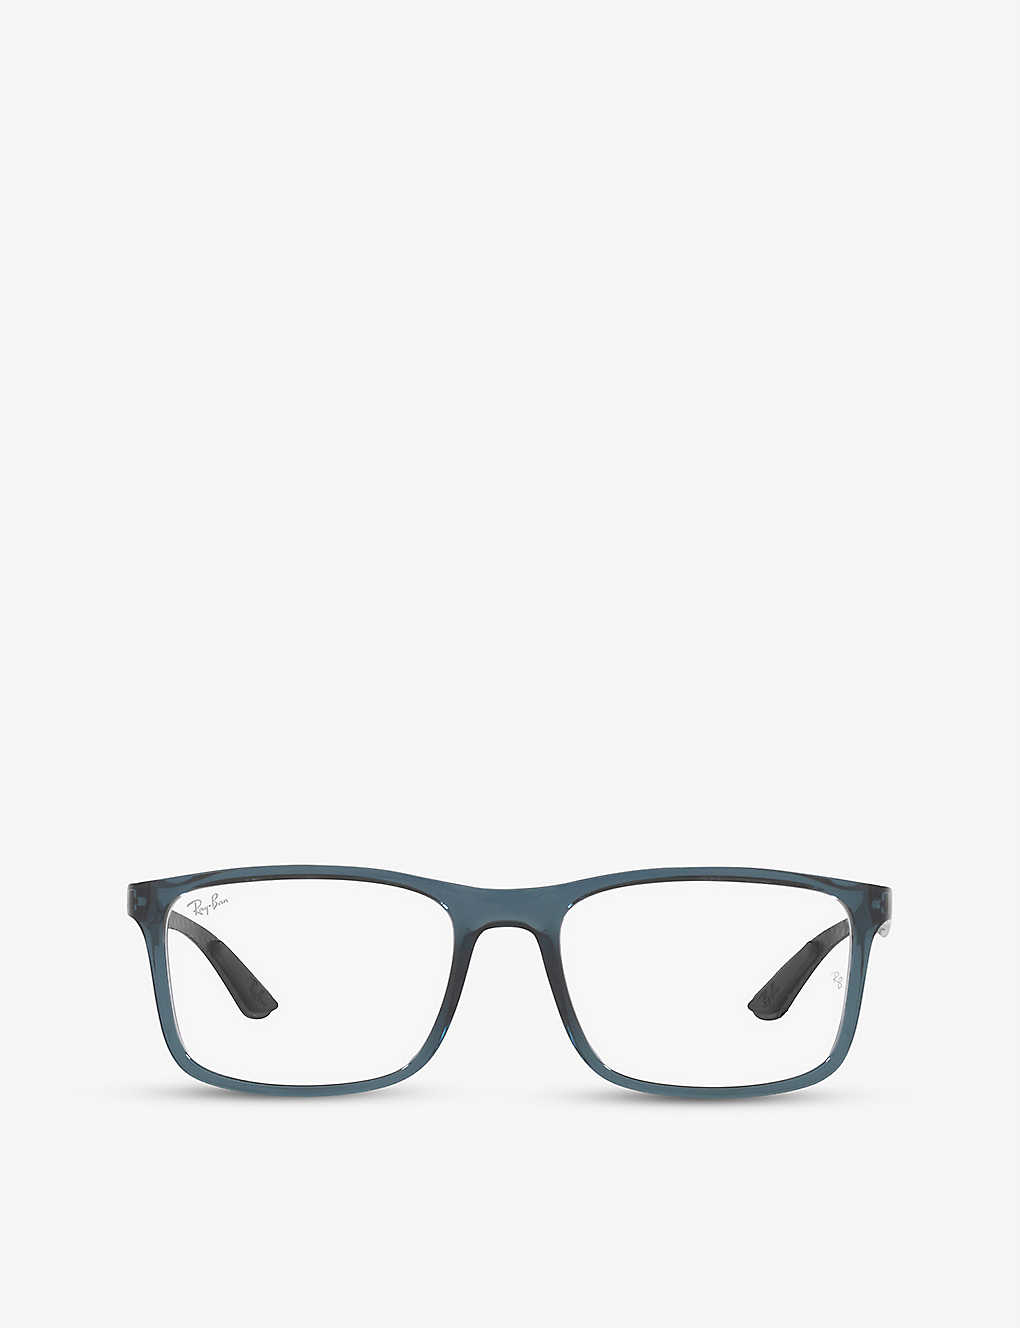 Caresource glasses frames cigna products